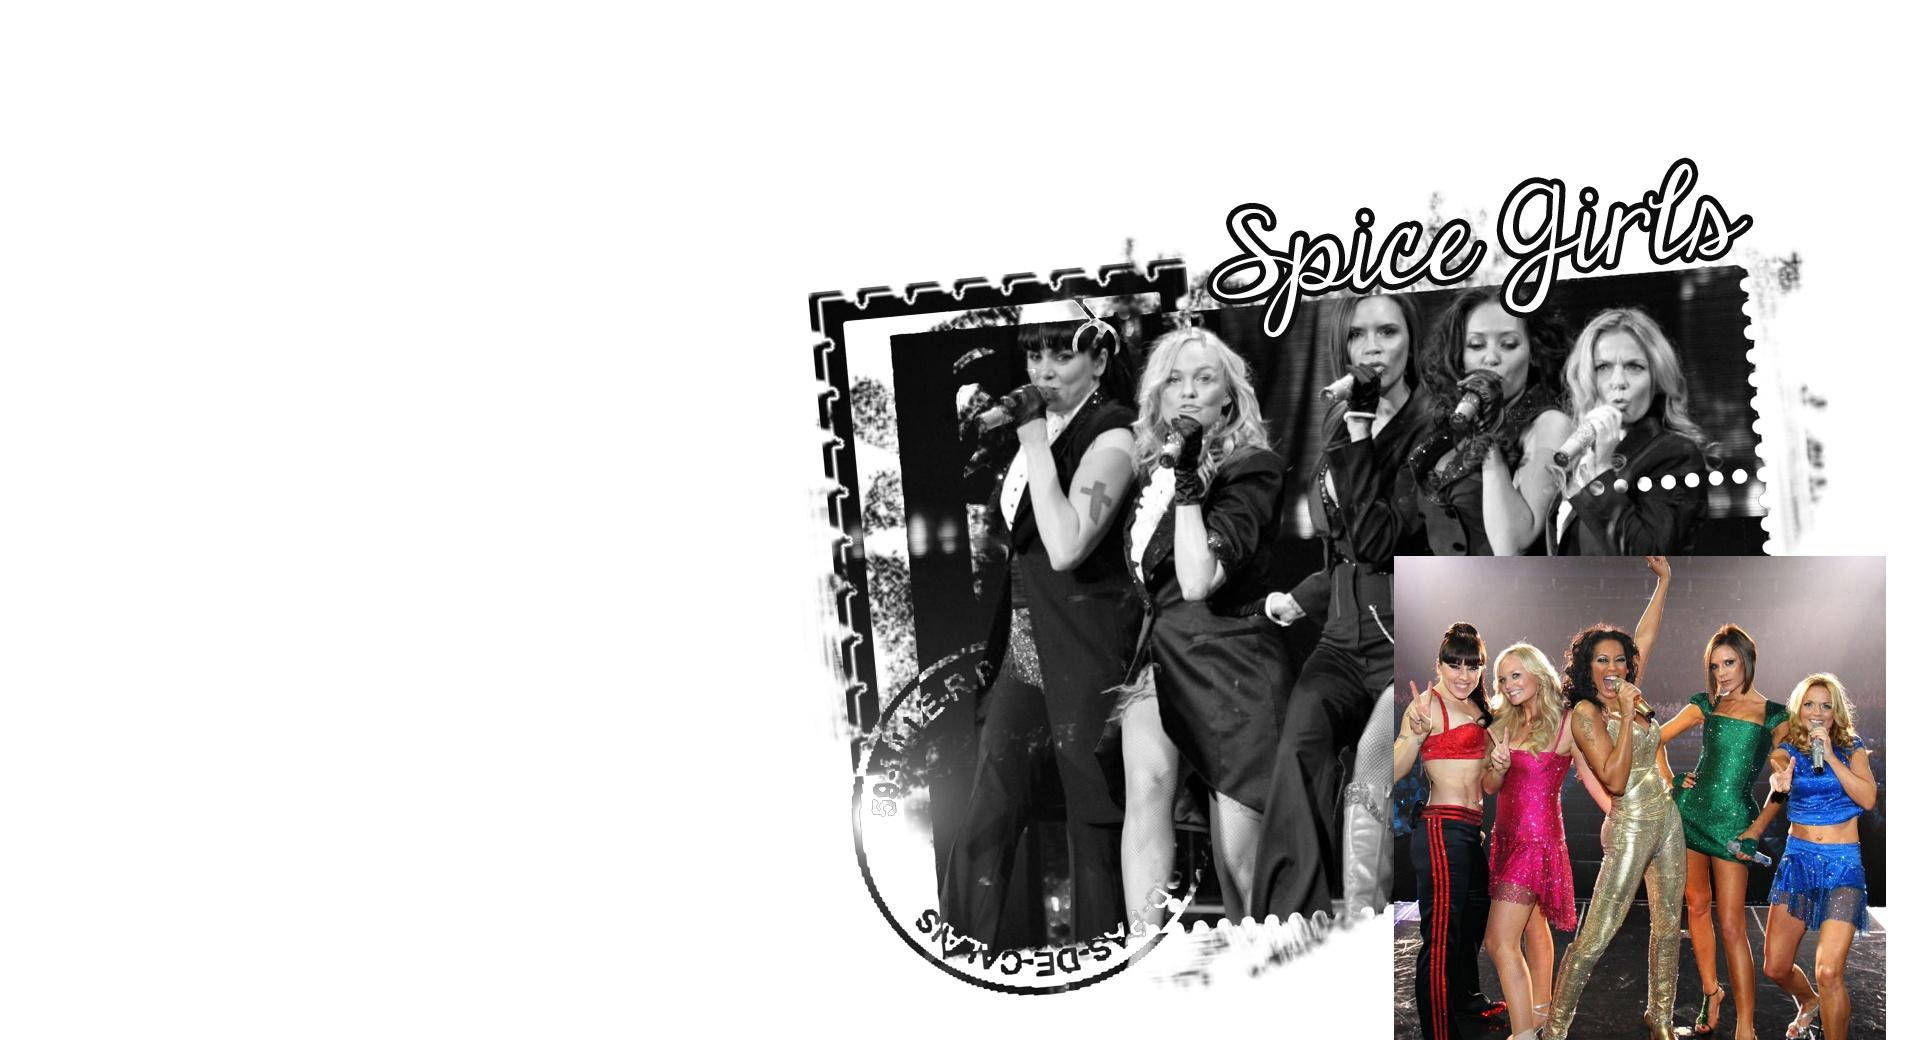 Spice Girls Digital Art Background